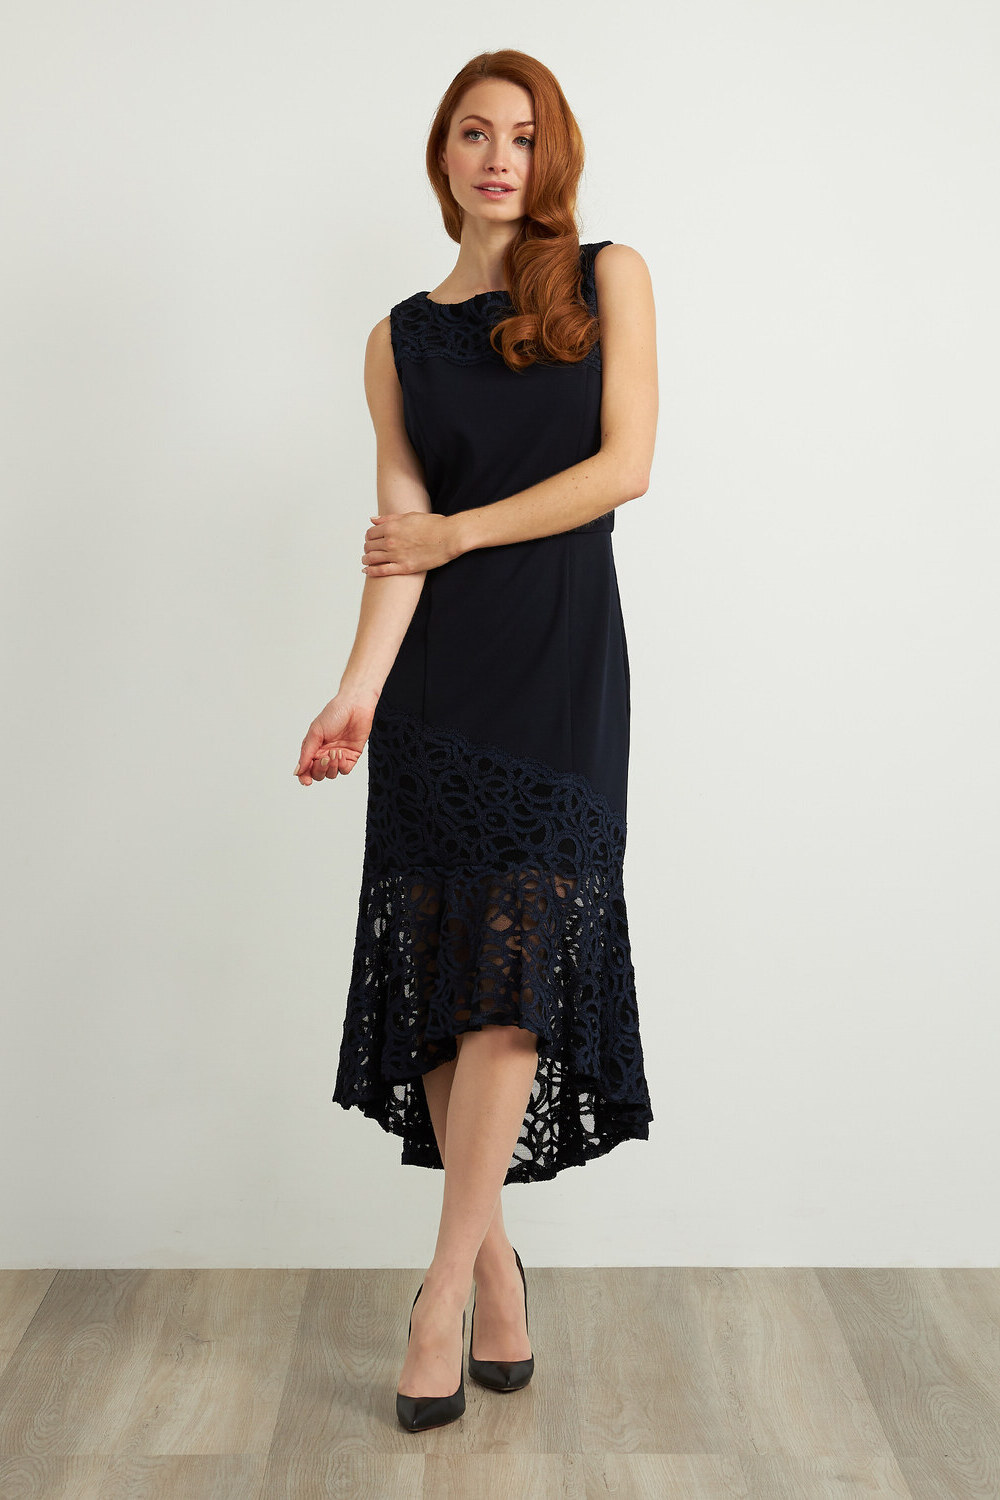 Joseph Ribkoff Appliqué Detail Dress Style 211071. Midnight Blue 40